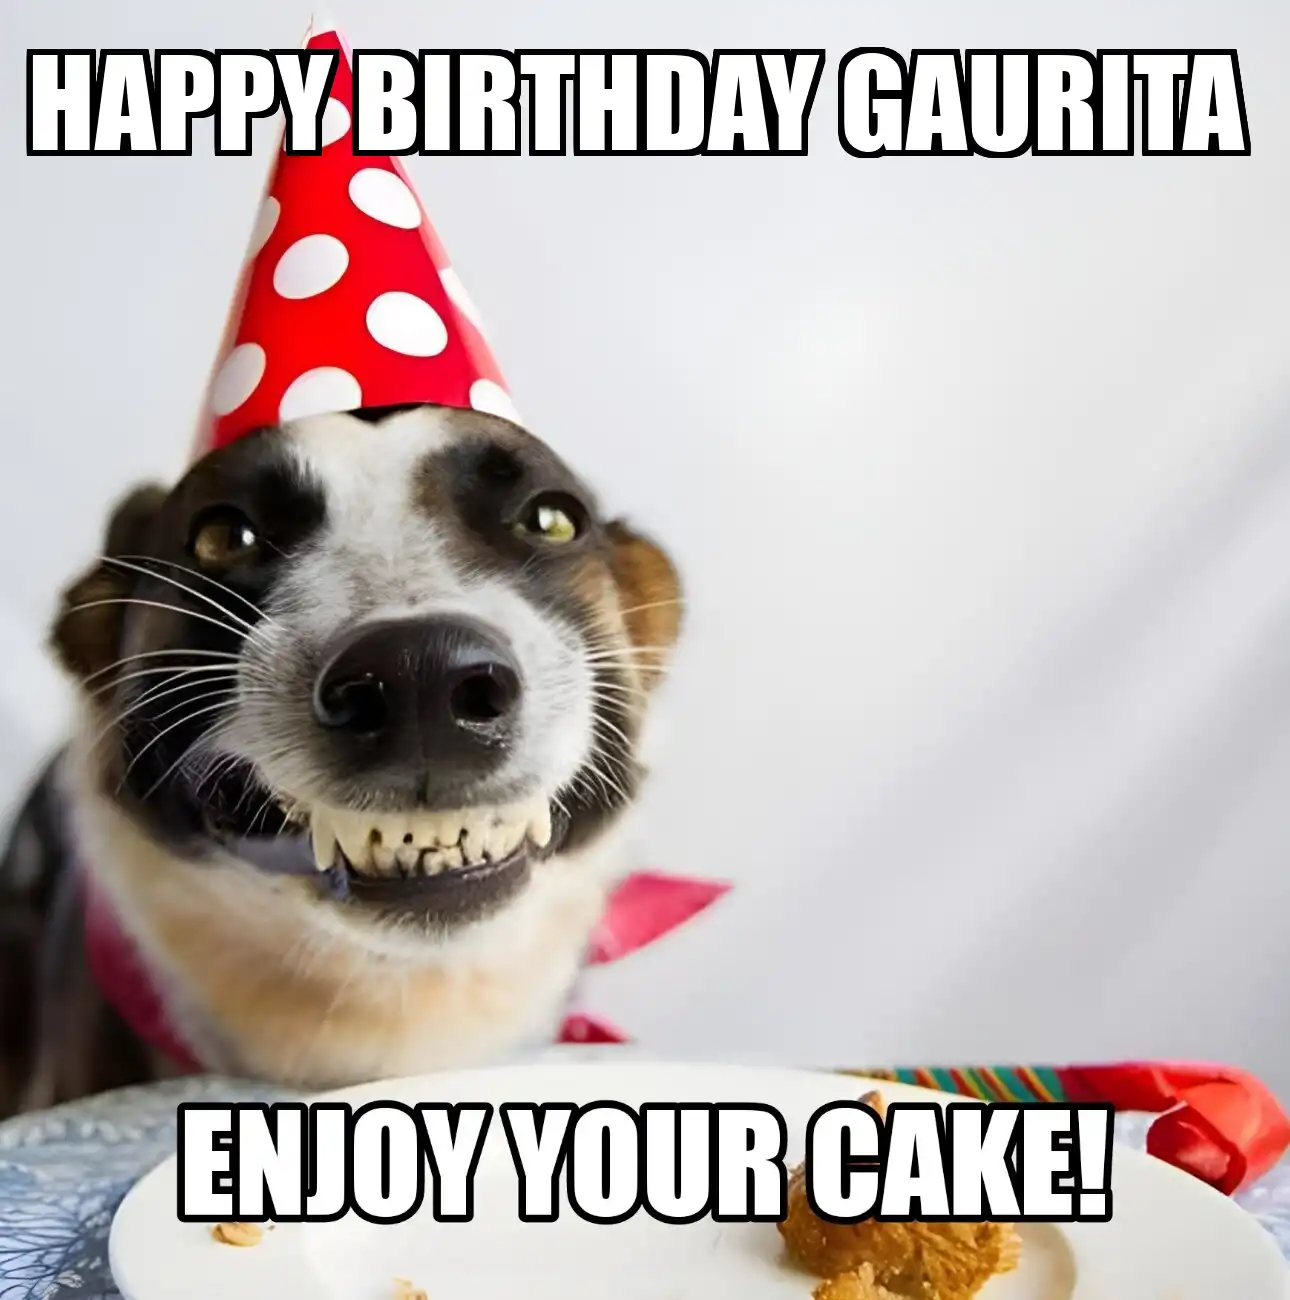 Happy Birthday Gaurita Enjoy Your Cake Dog Meme